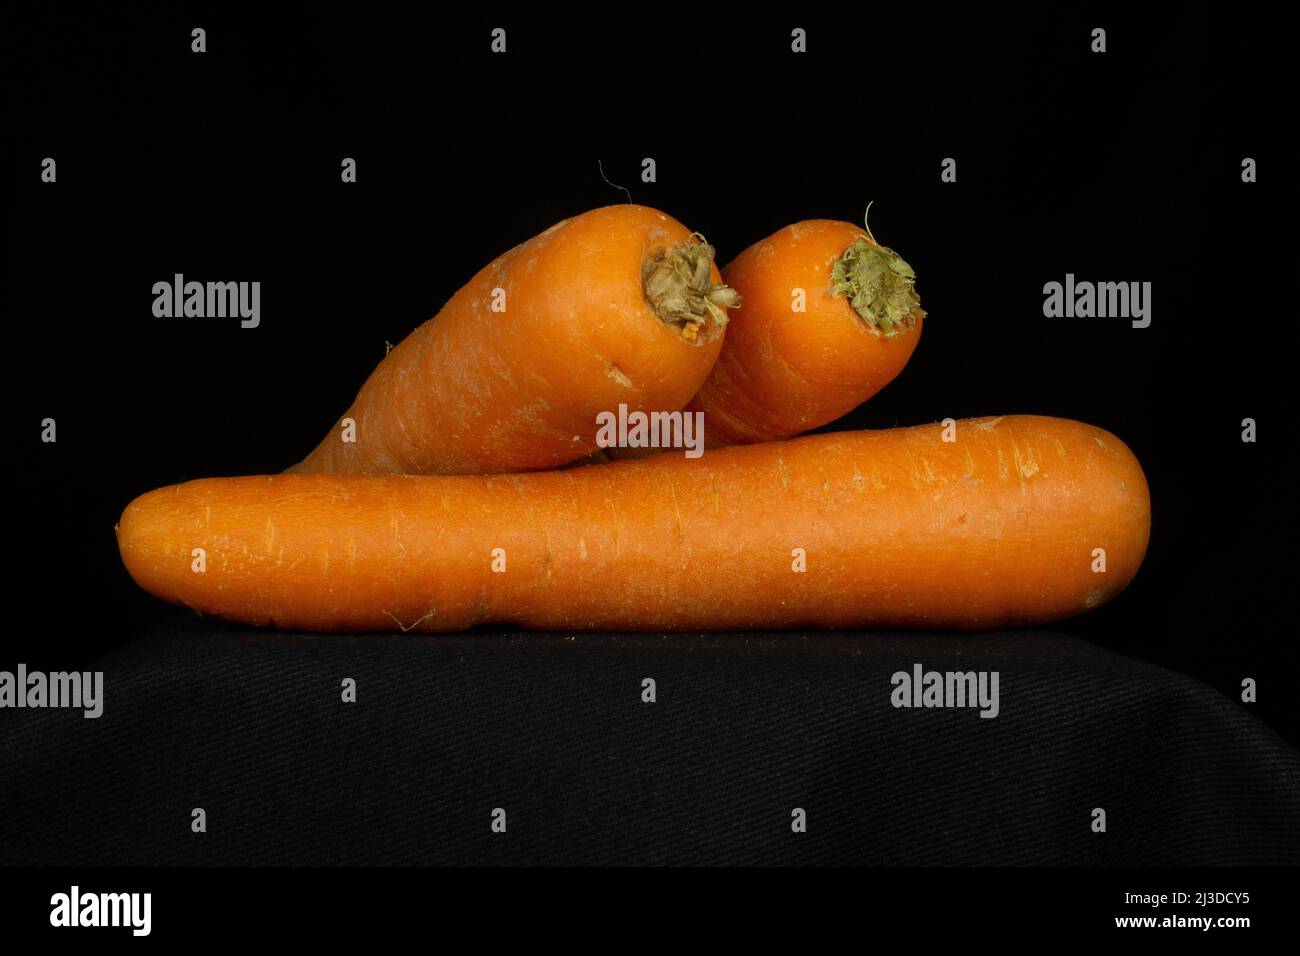 three orange carrots isolated on a black background Stock Photo